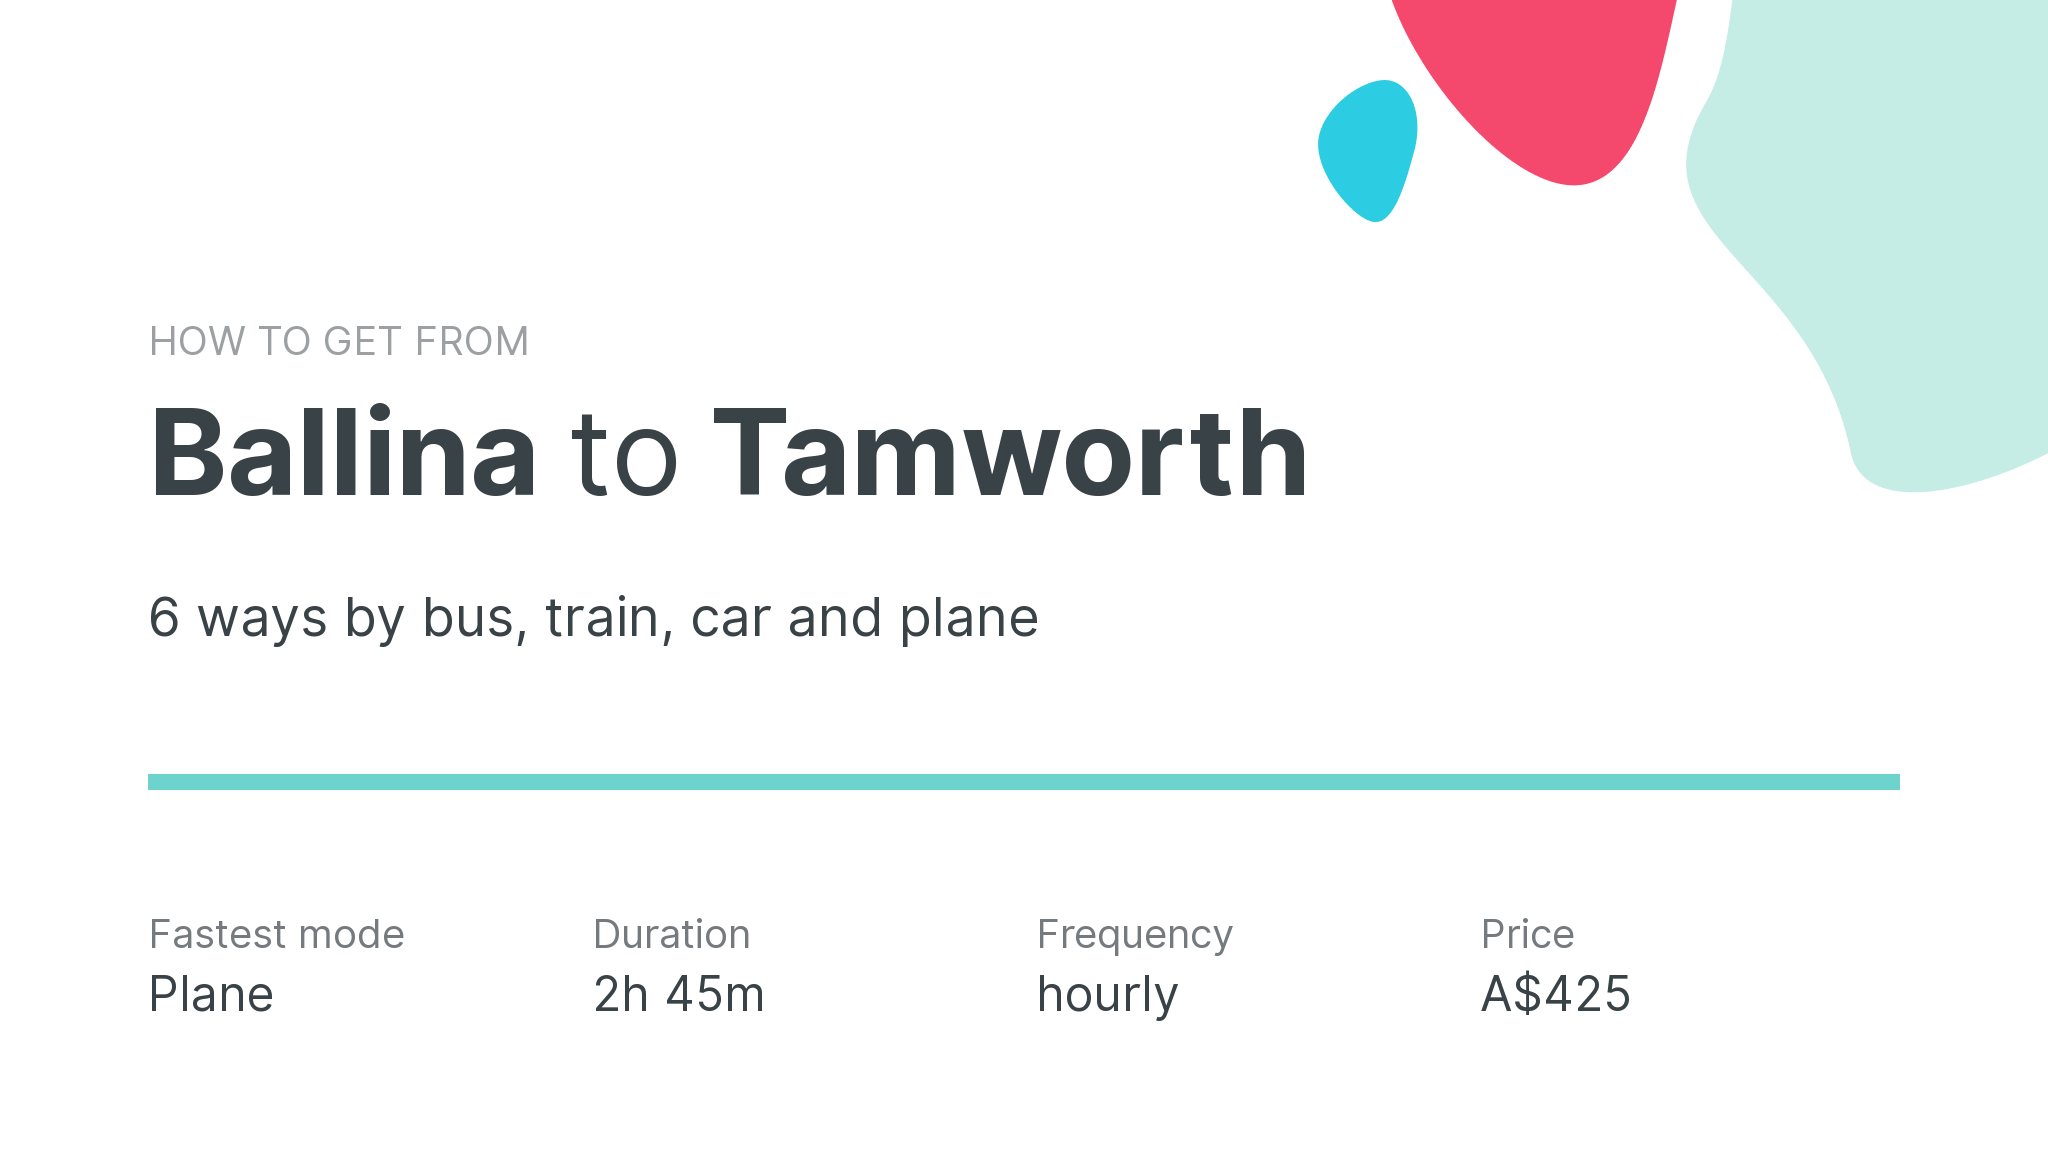 How do I get from Ballina to Tamworth